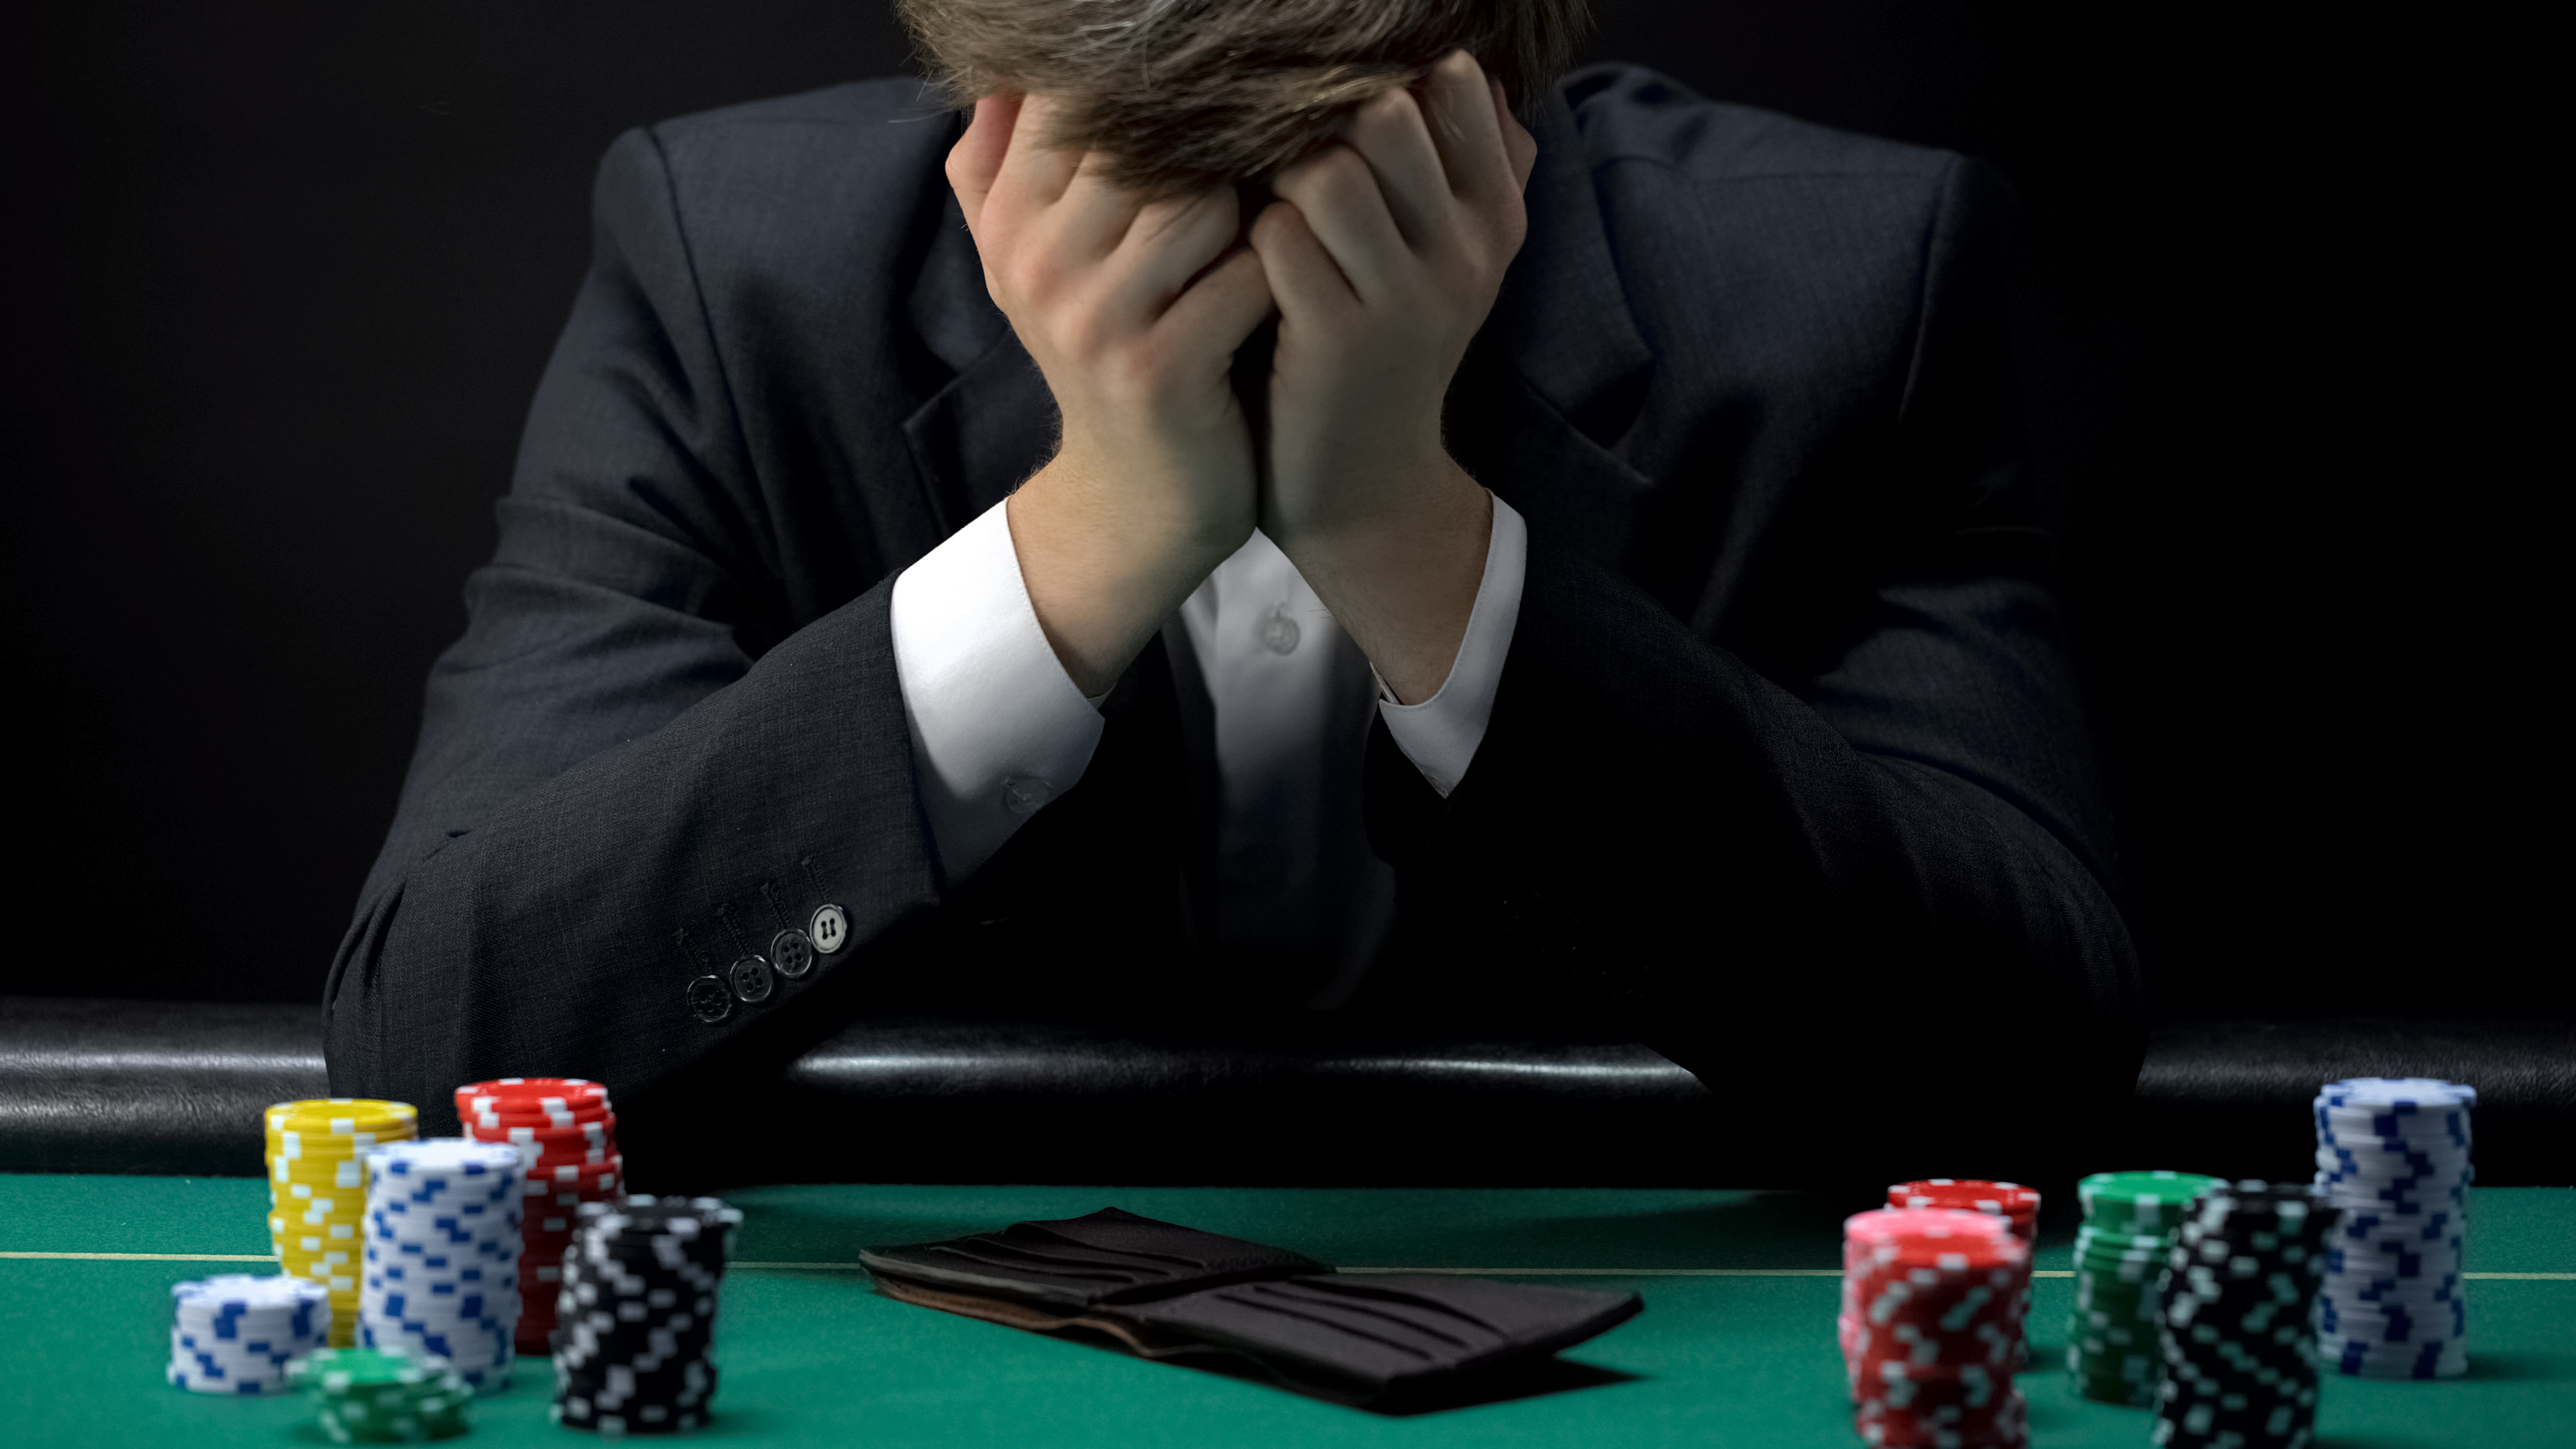 Man losing at a game of poker